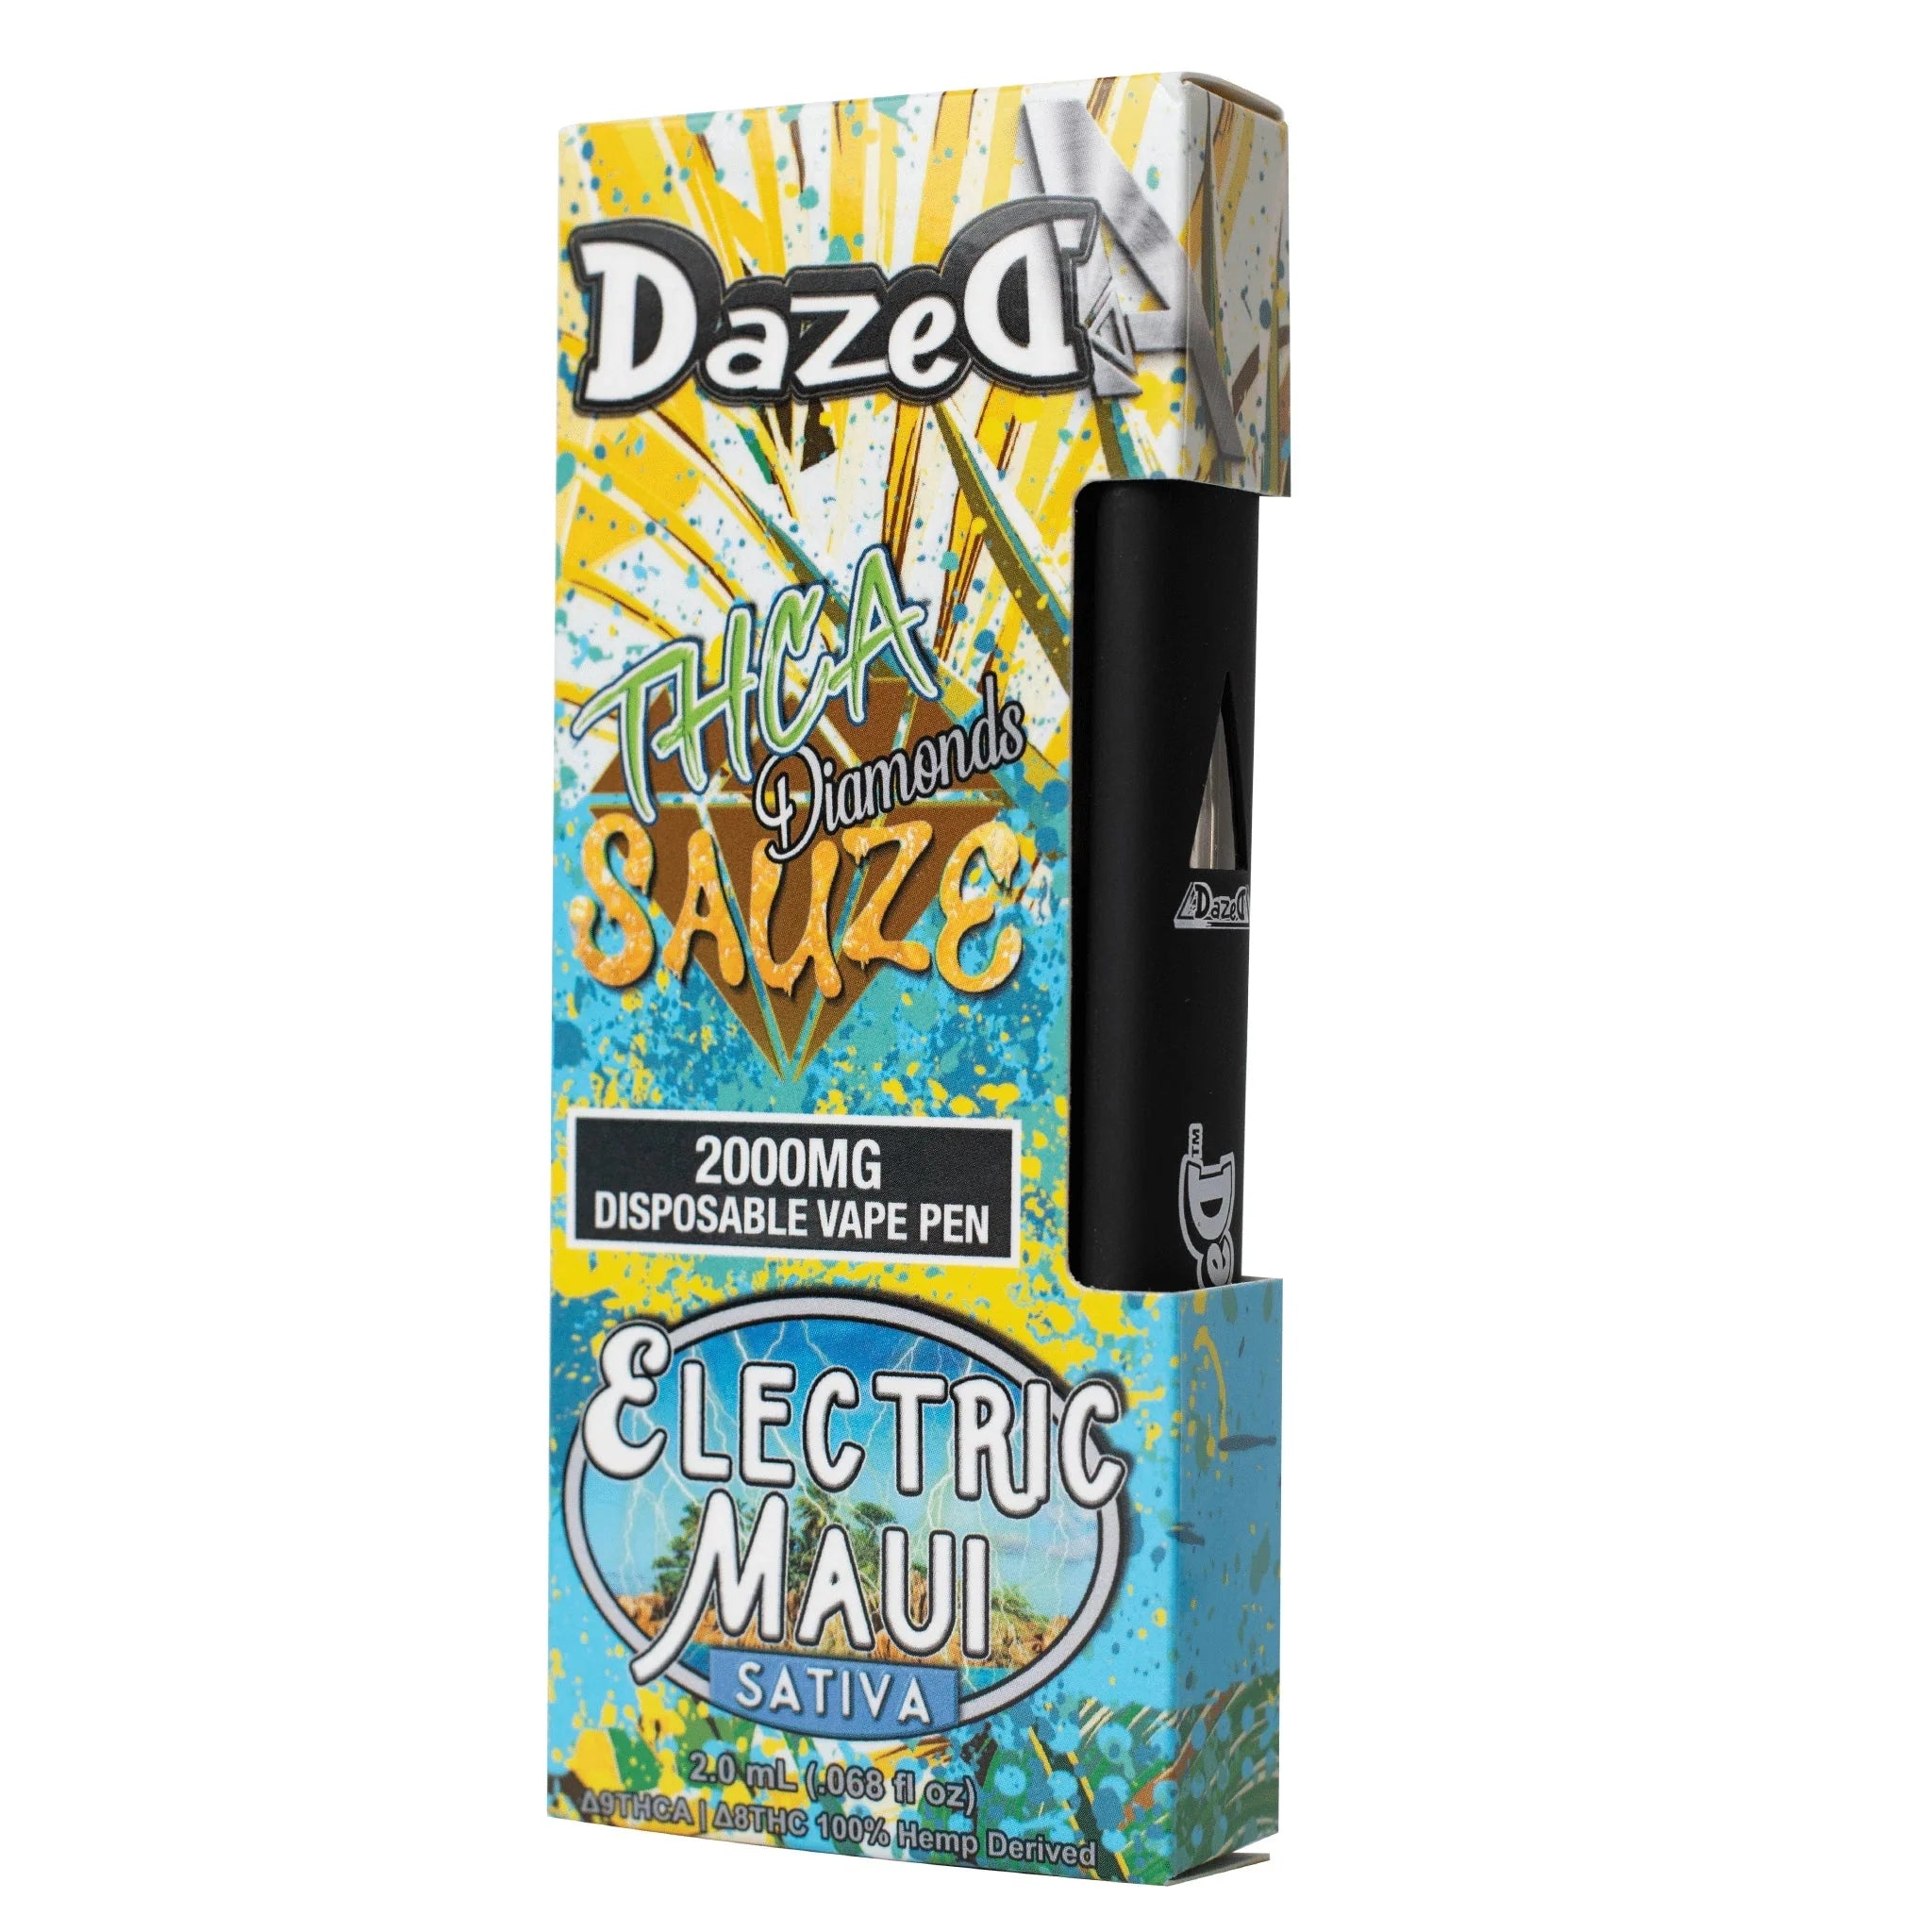 DazedA THCA Diamonds Sauze Disposable Vape Pens (2g) Best Price